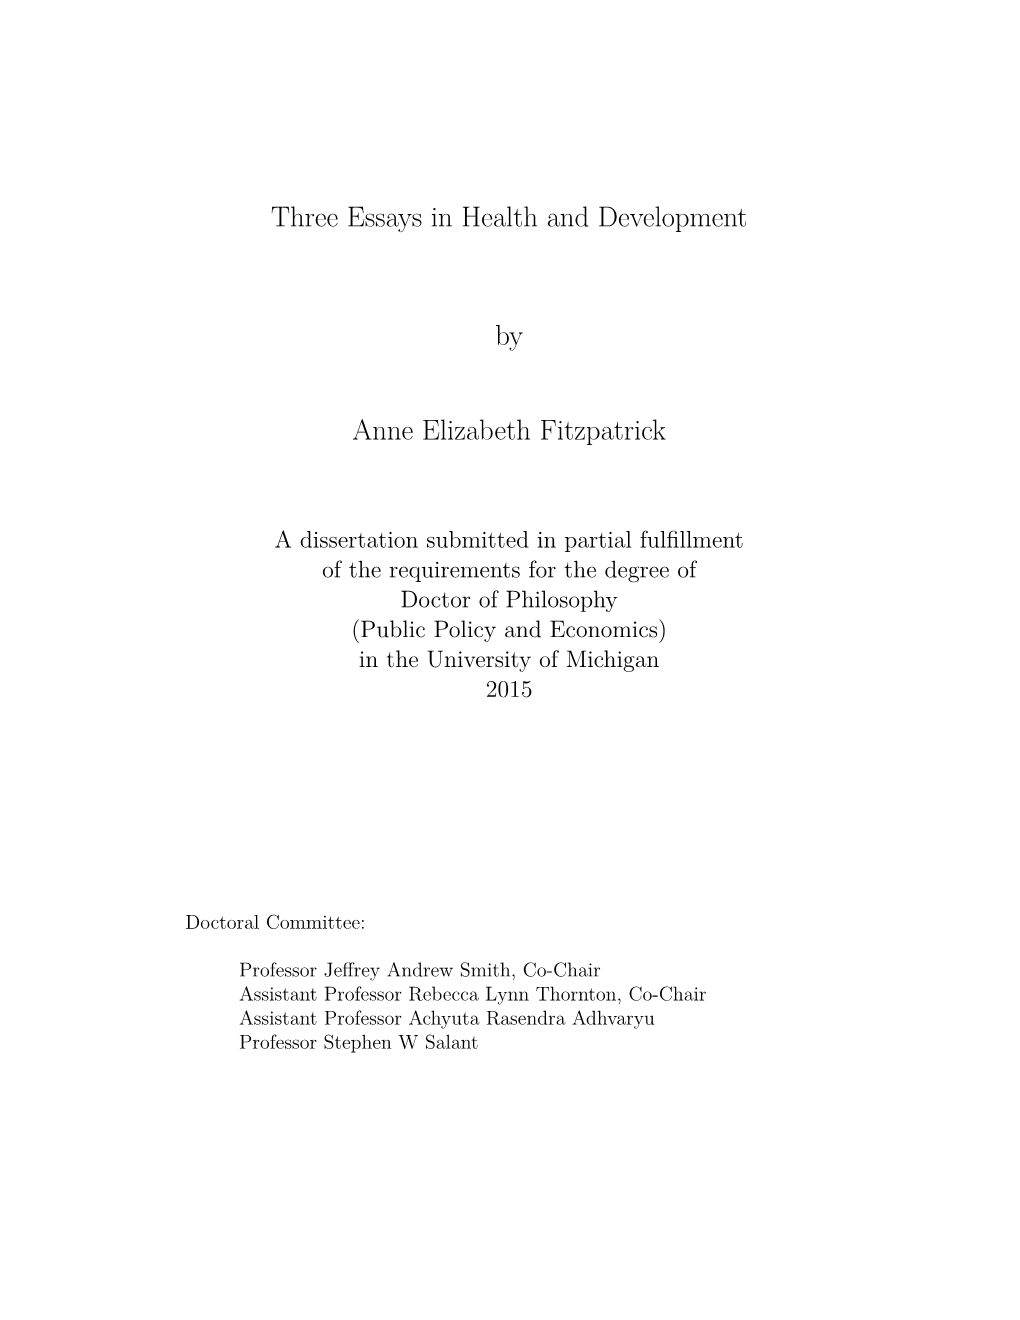 Three Essays in Health and Development by Anne Elizabeth